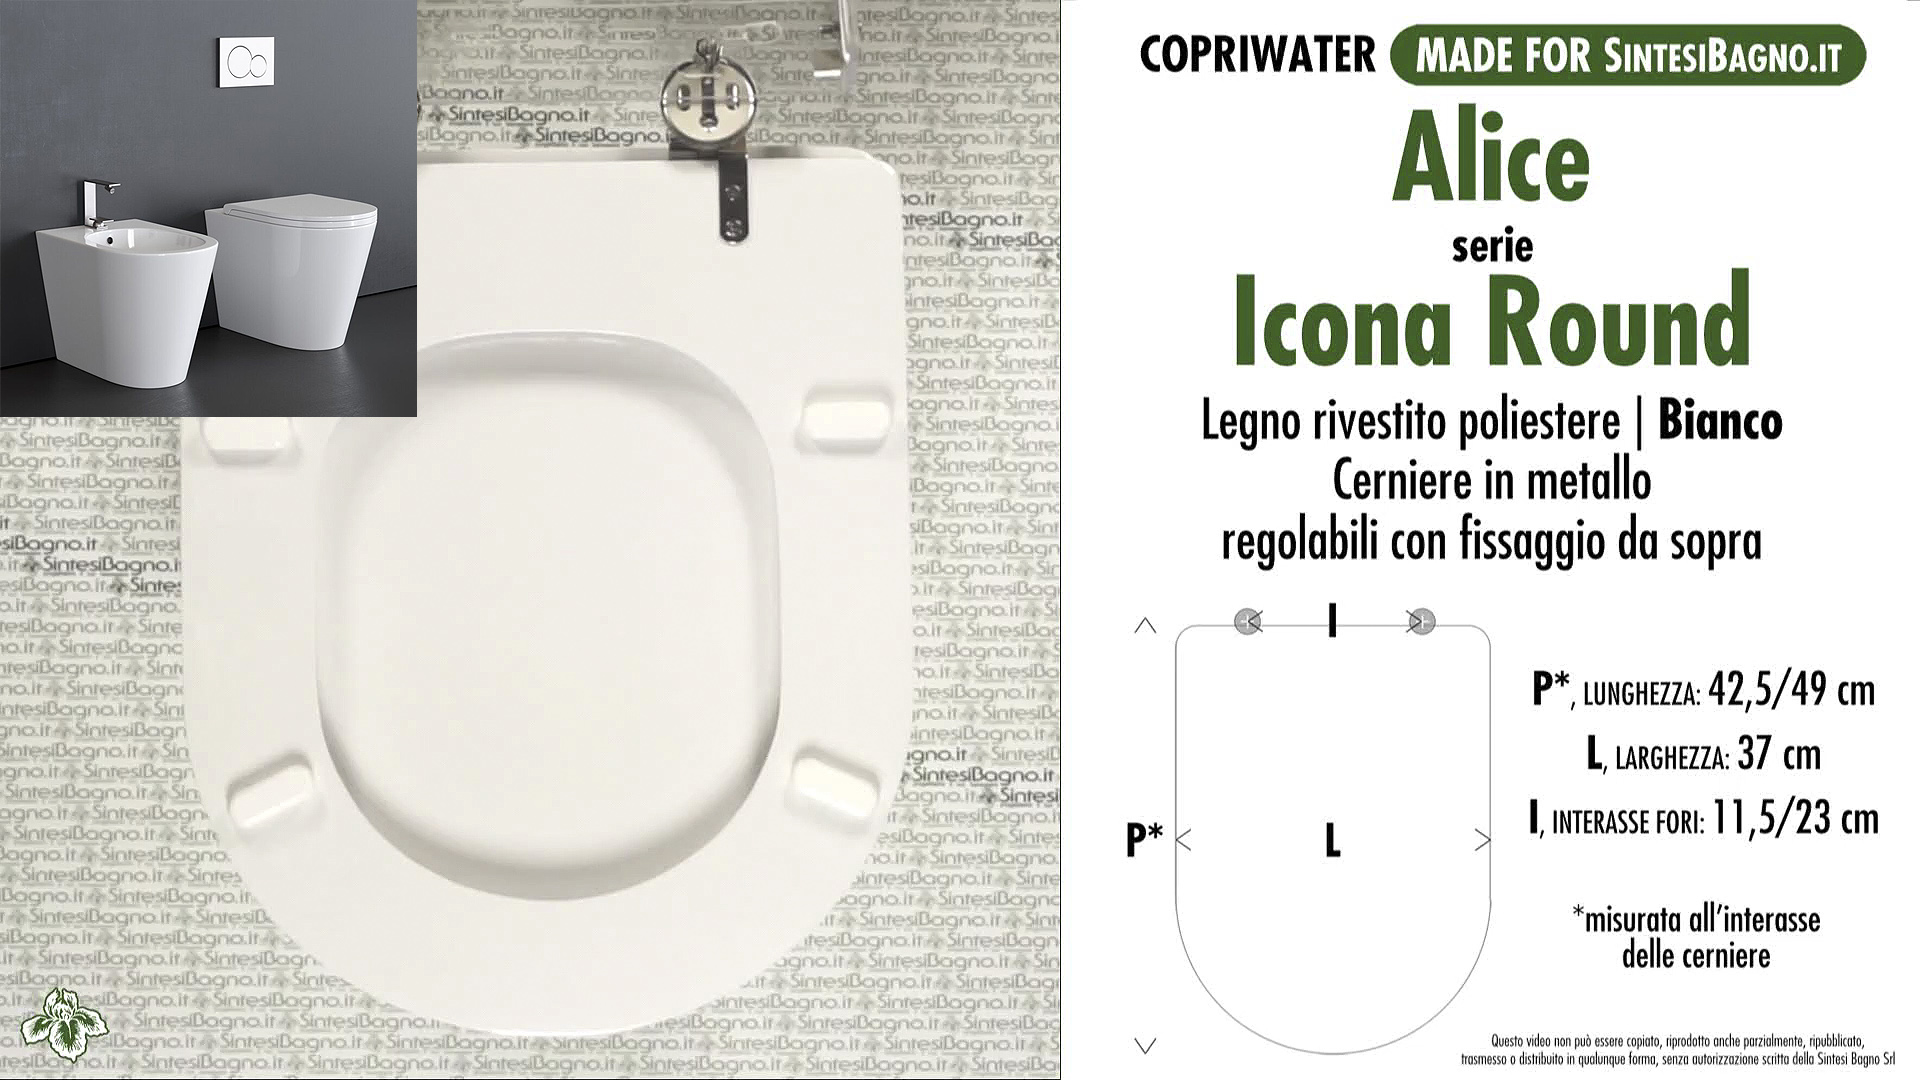 Ricambio COPRIWATER per vasi/WC marca ALICE